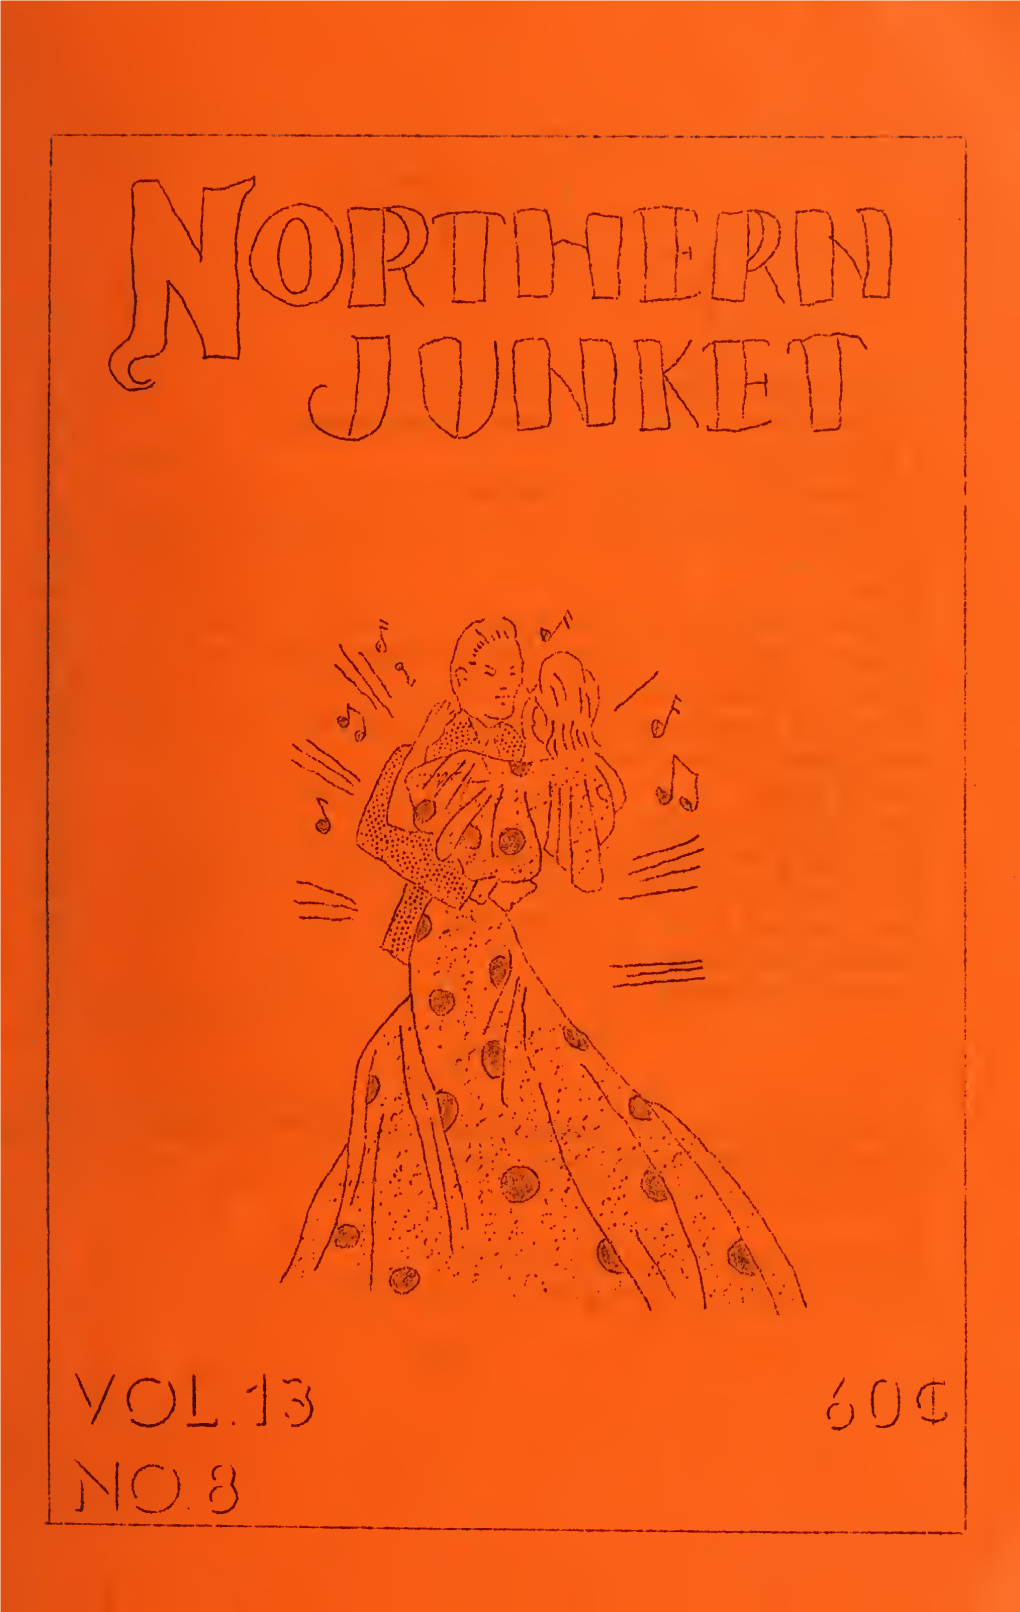 Northern Junket, Vol. 13, No. 8